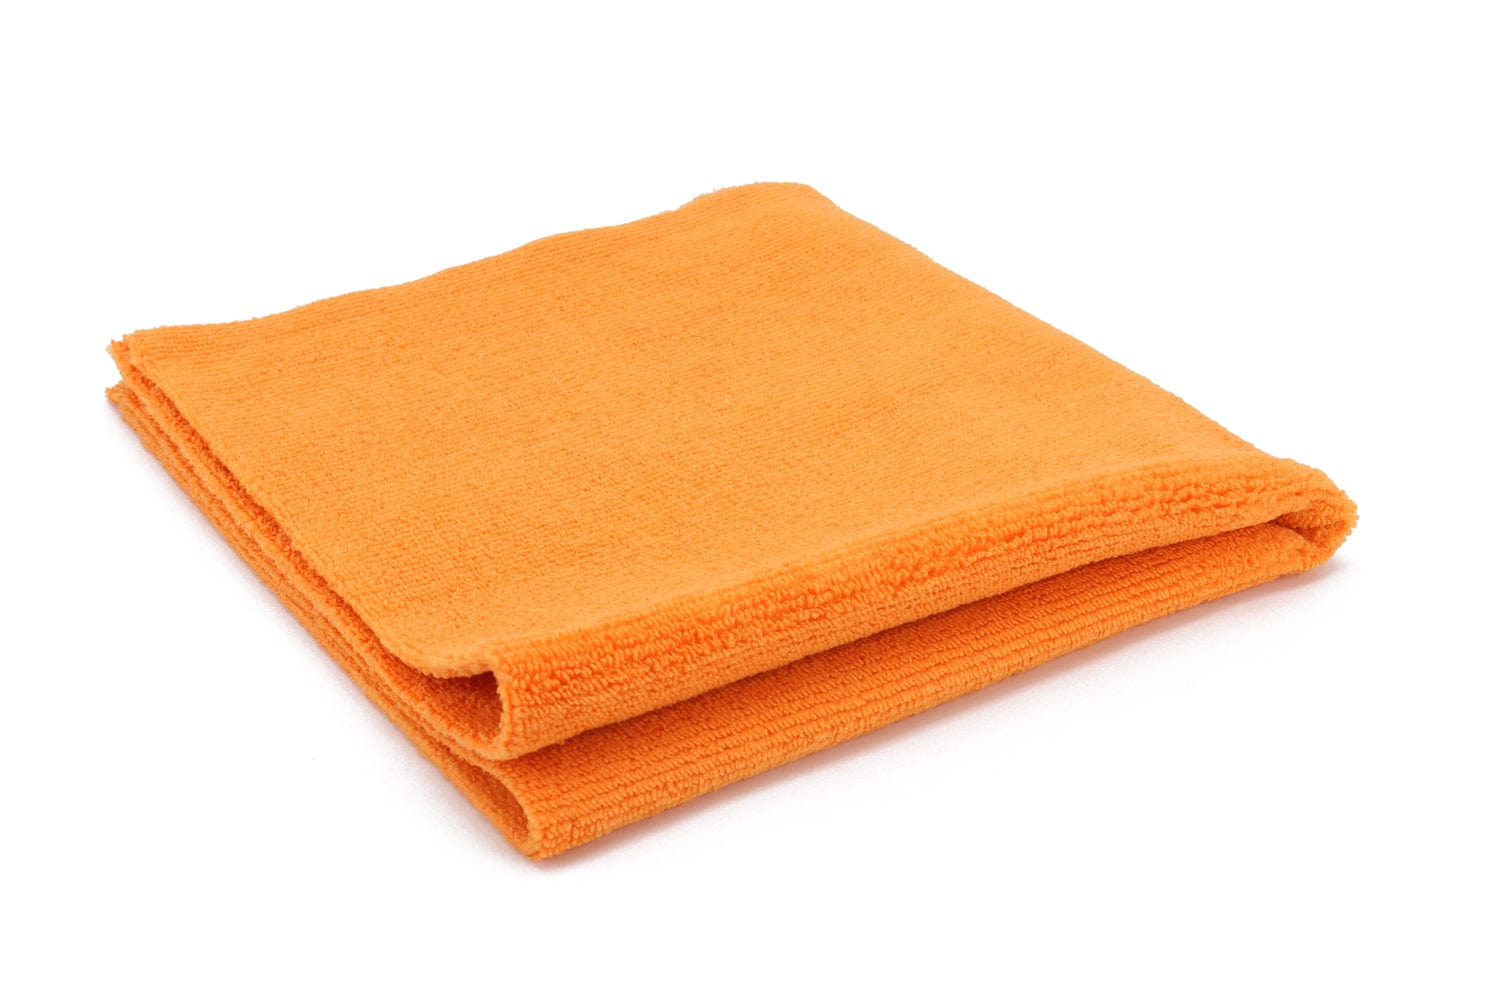 Autofiber Bulk Towel Orange FULL CASE [Mr. Everything] 390gsm 16"x16" - 200/case